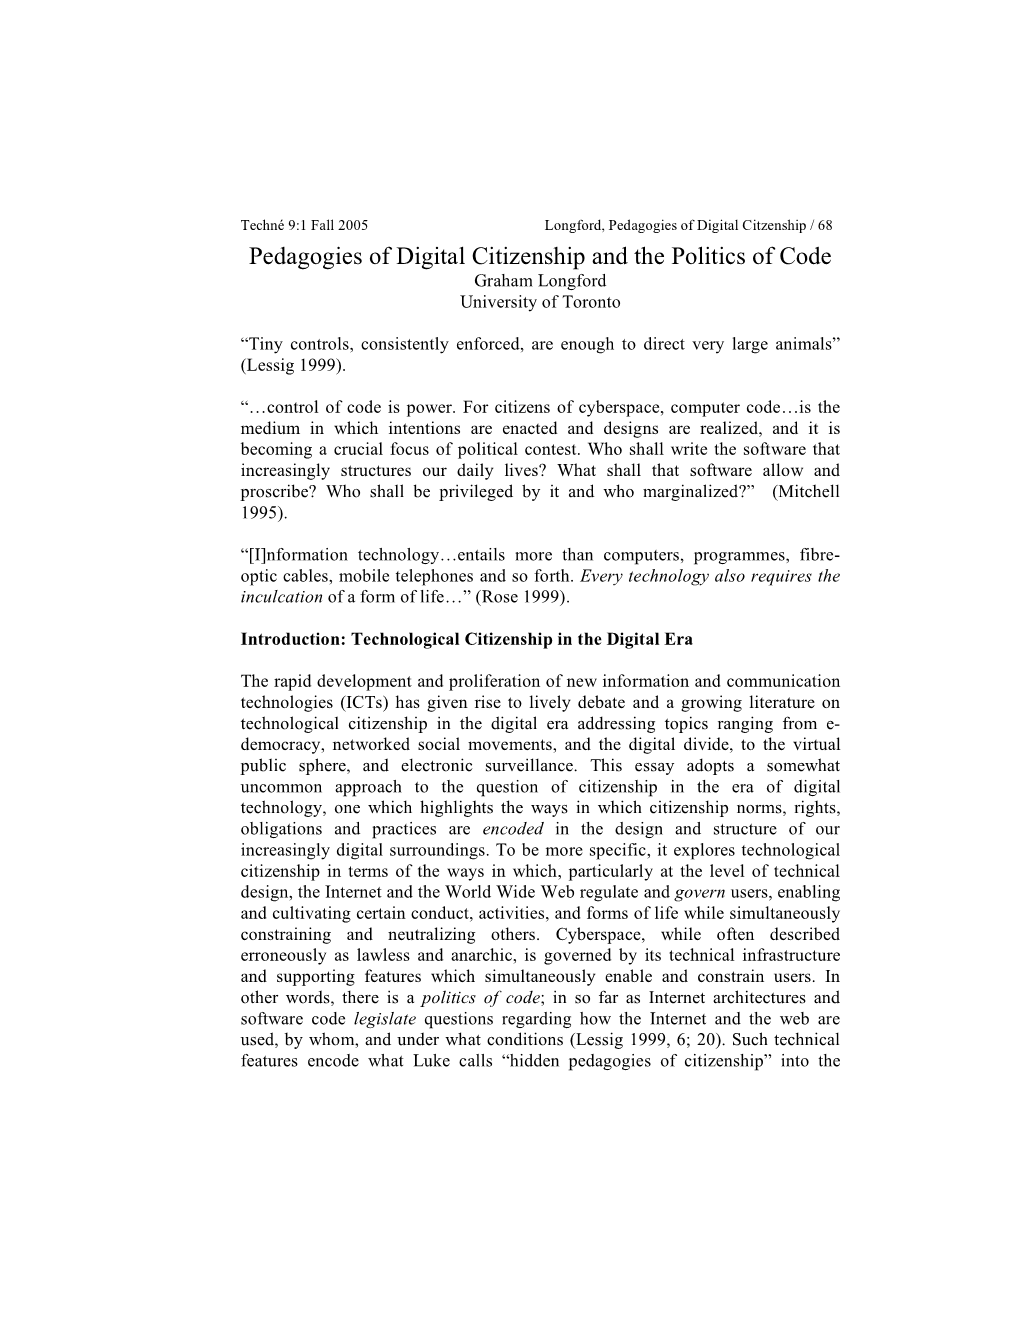 Pedagogies of Digital Citizenship and the Politics of Code Graham Longford University of Toronto